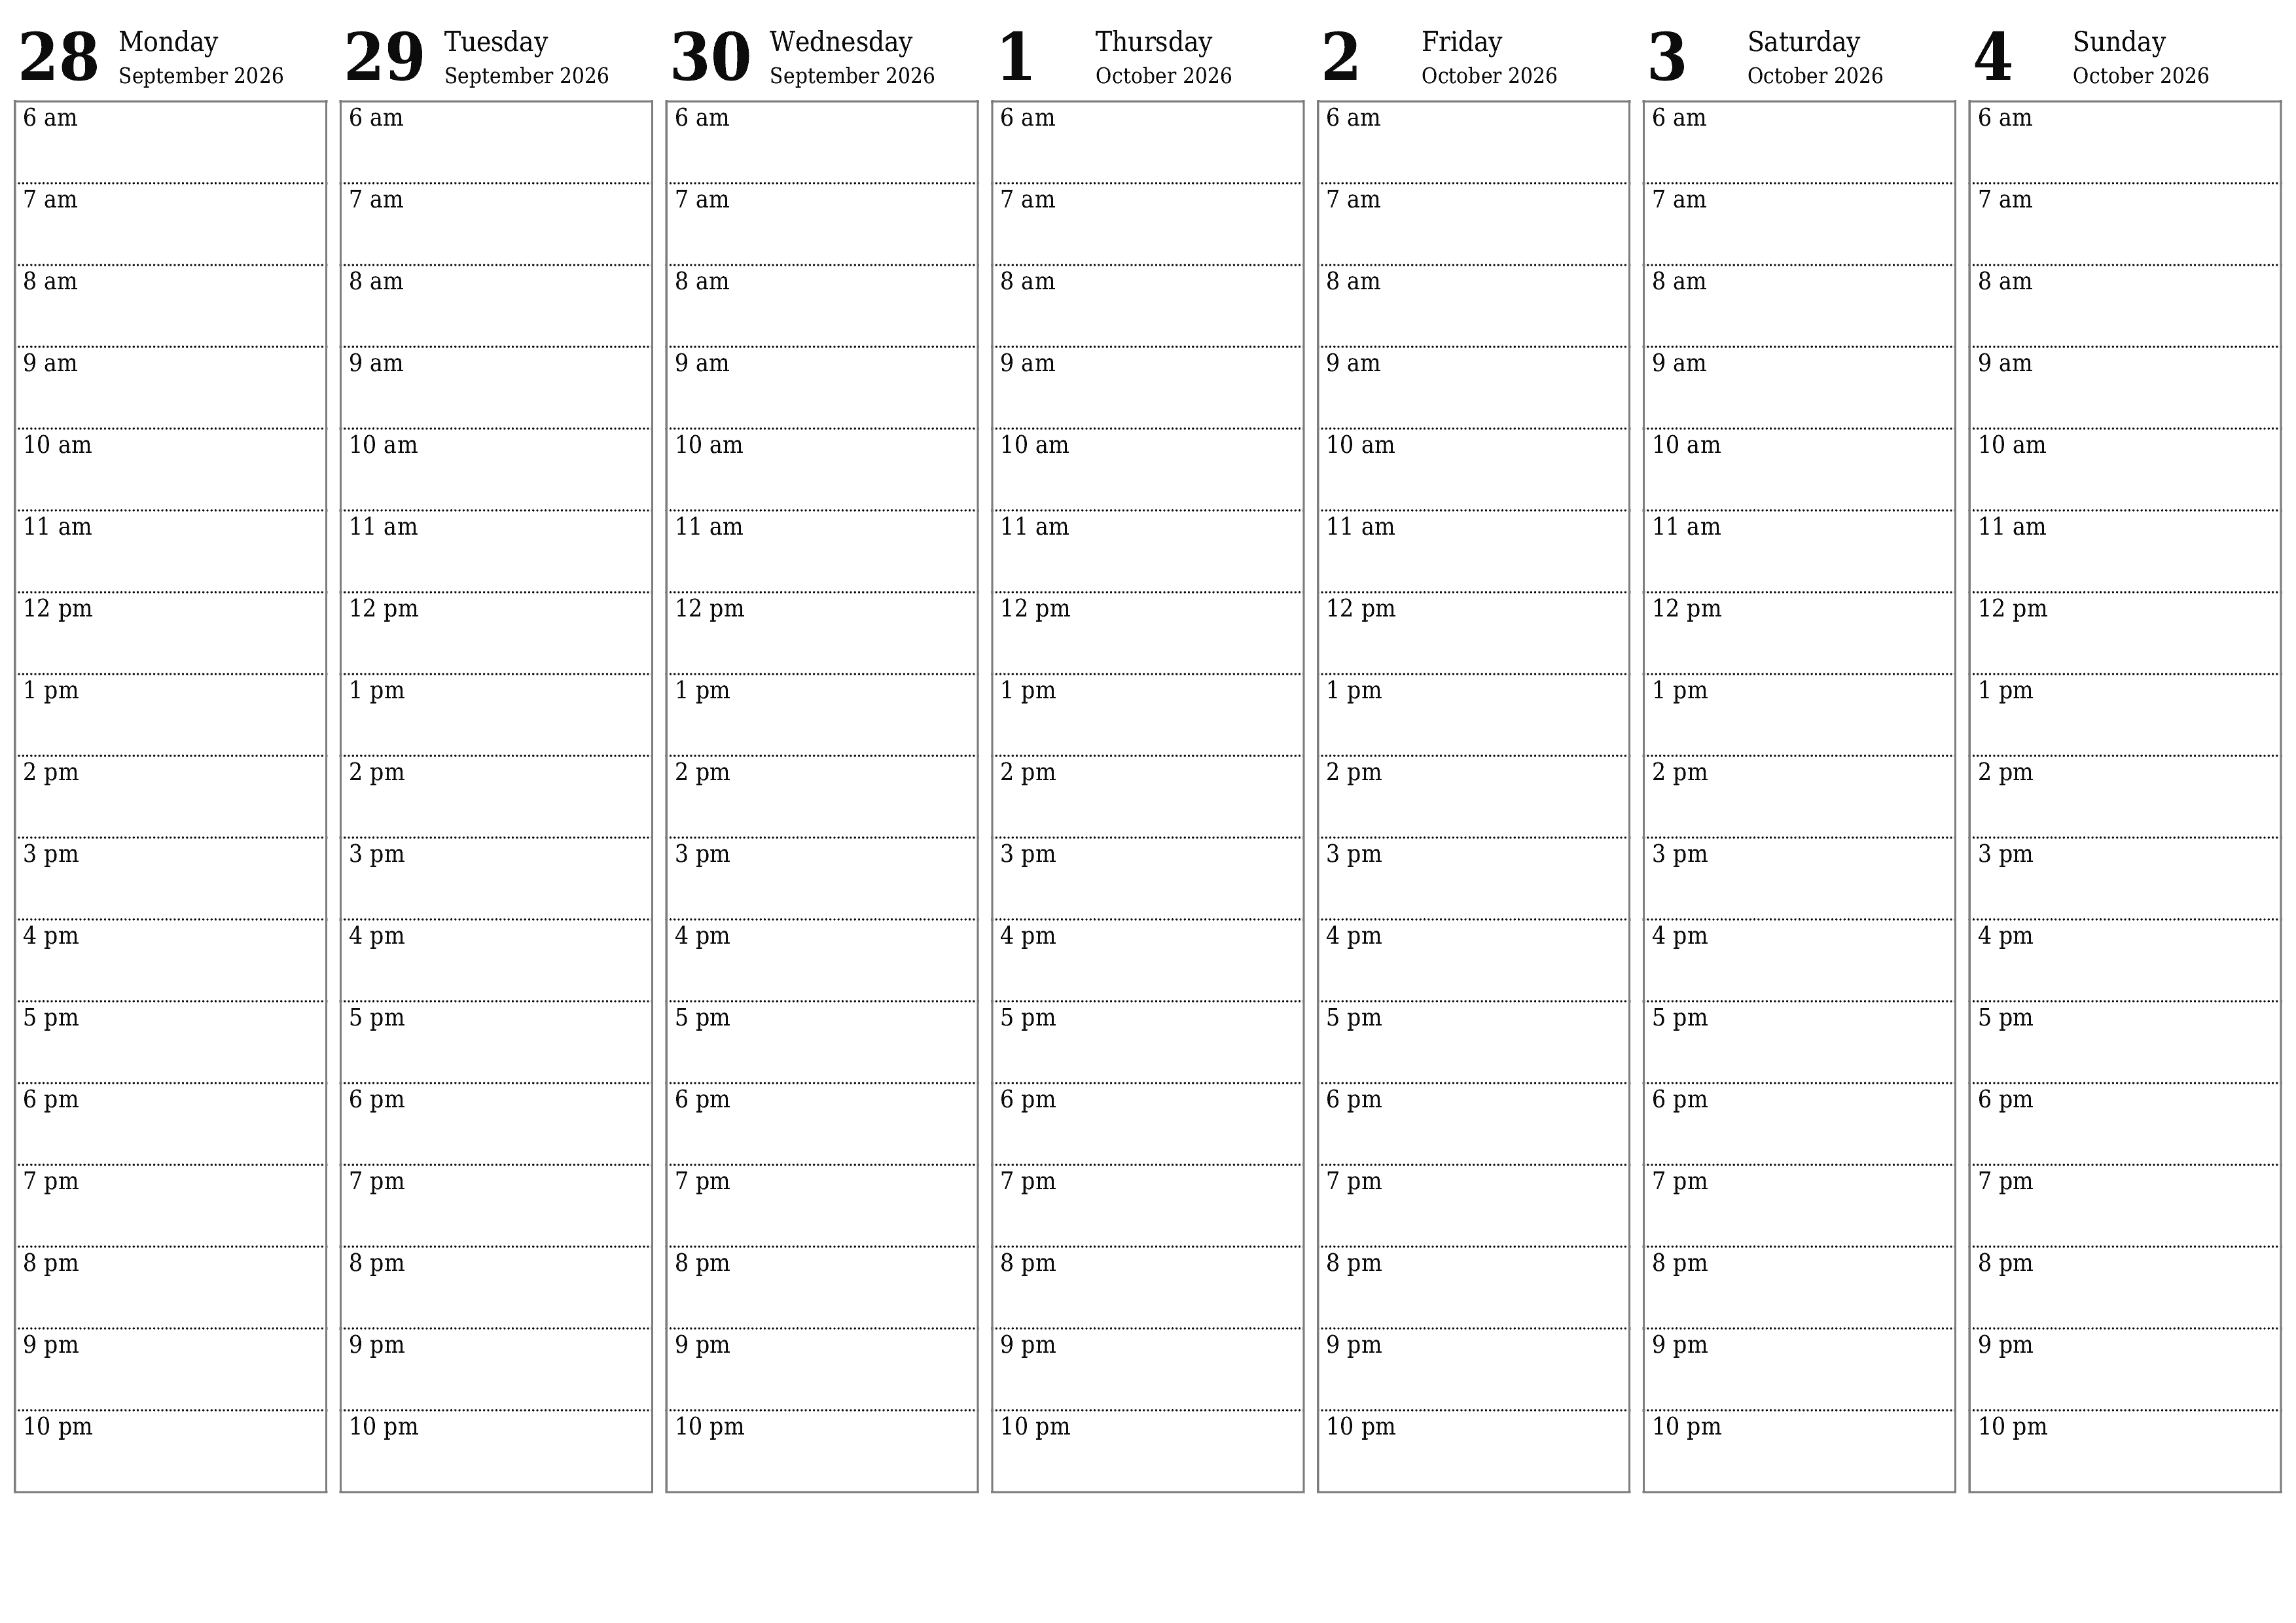 printable wall template free horizontal Weekly planner calendar October (Oct) 2026